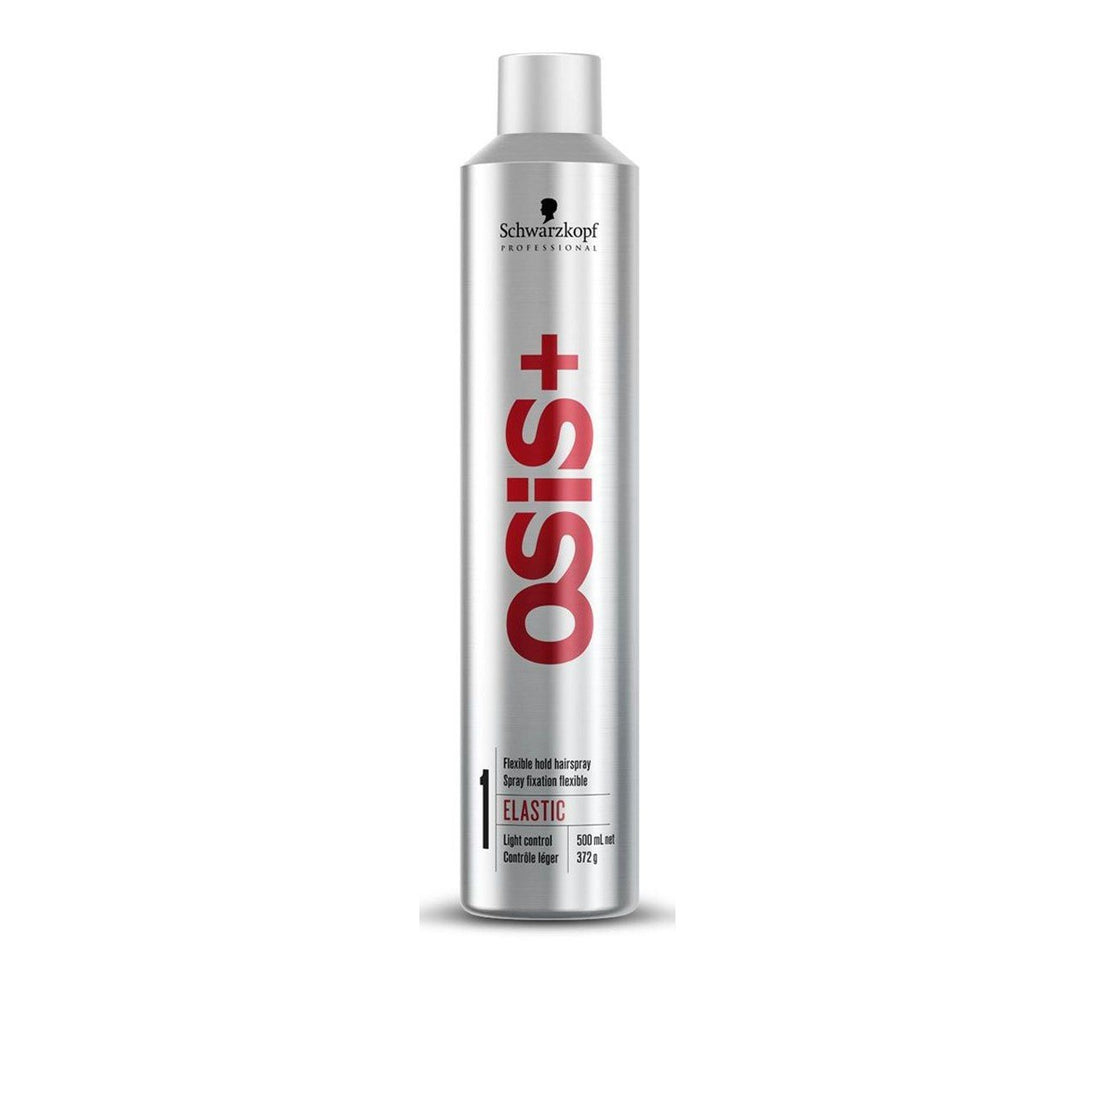 Schwarzkopf OSiS+ Elastic Hold Hairspray Light Control 500ml